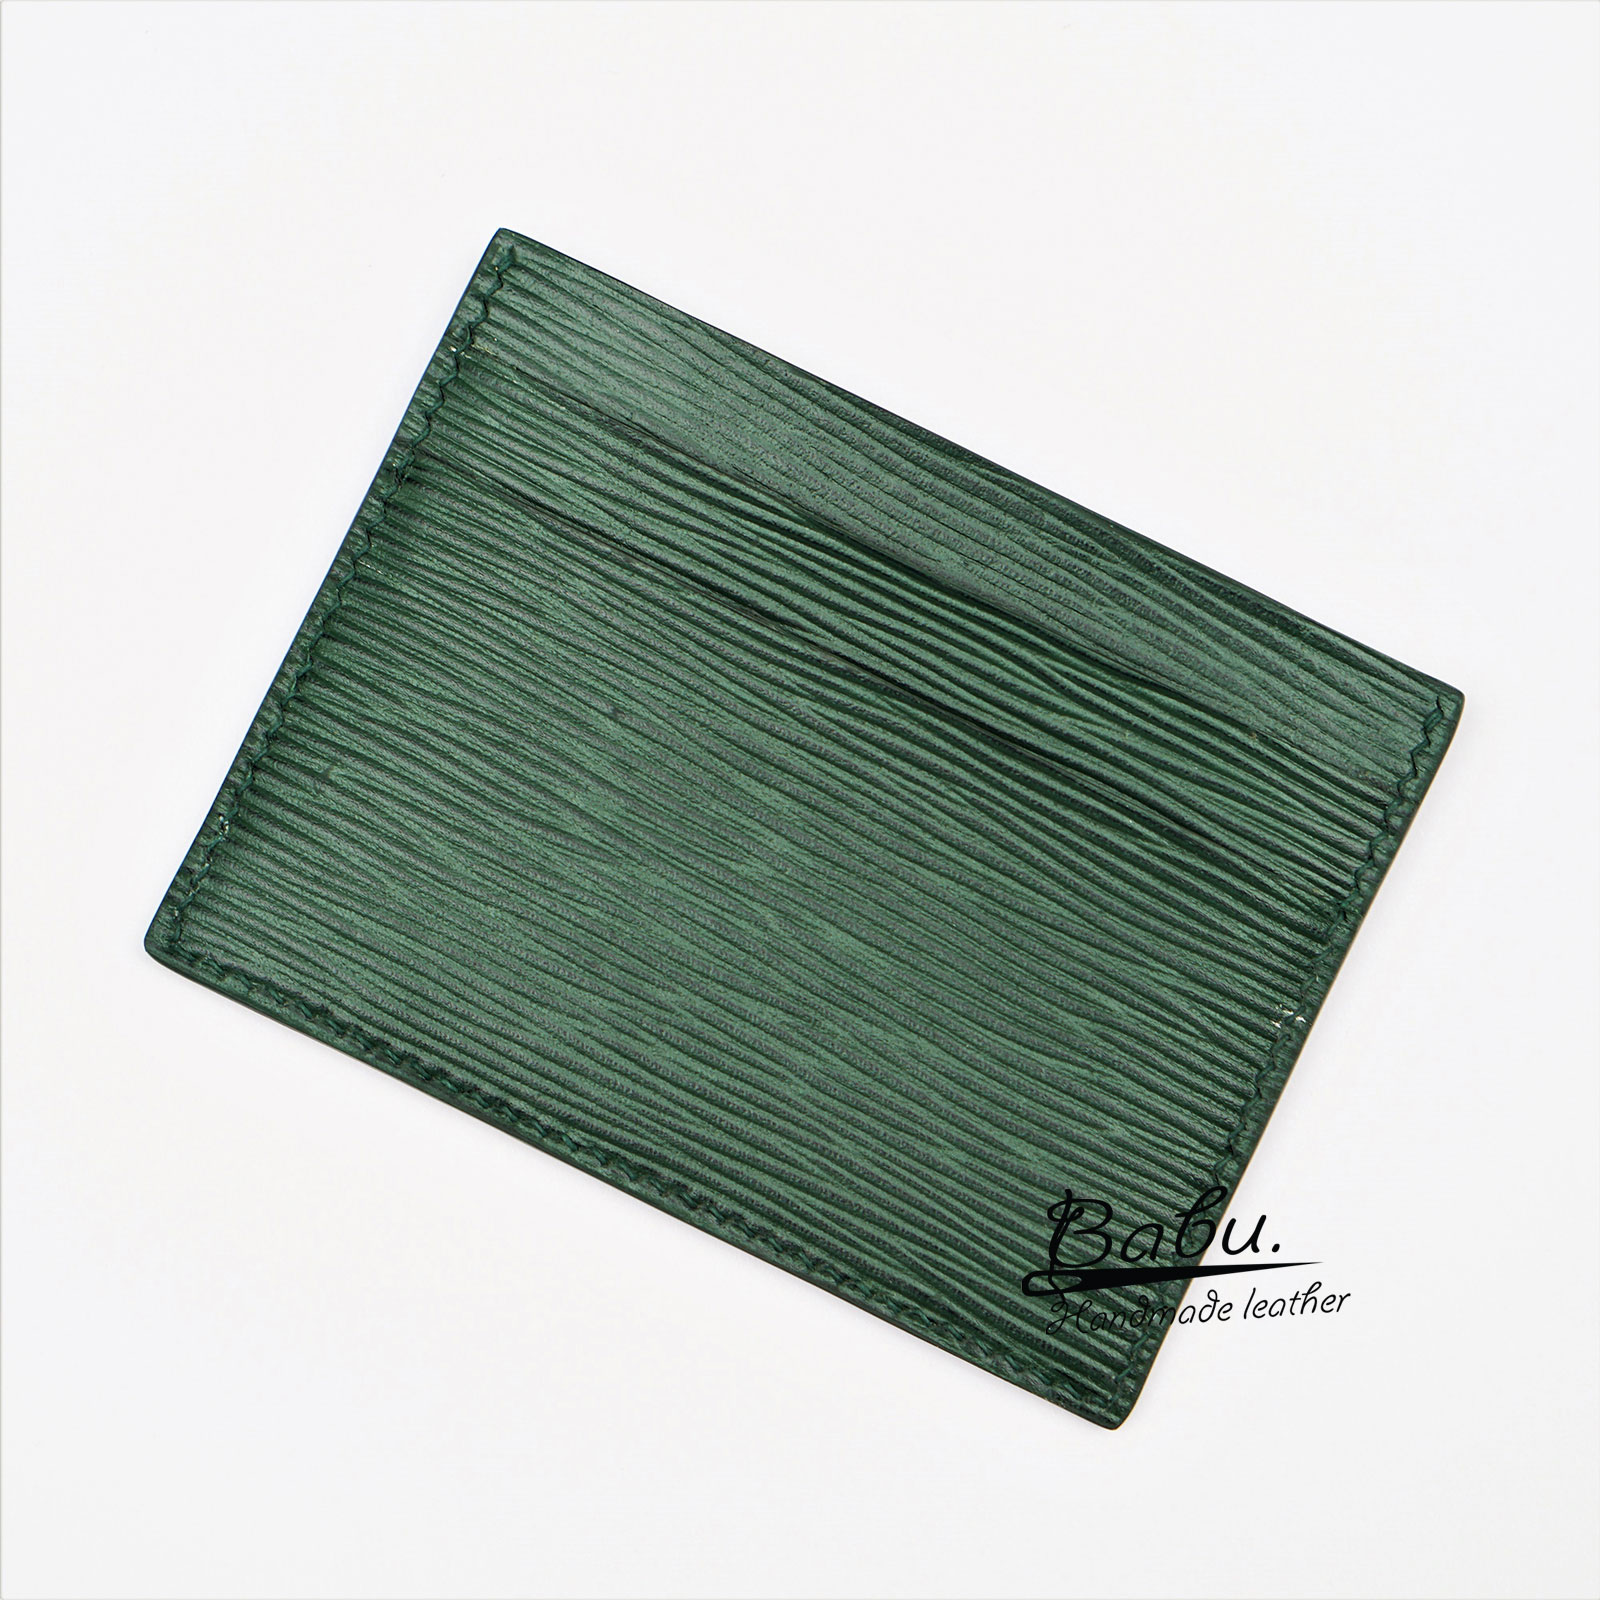 Premium Epi leather Credit Card Holder, Dark Green leather card